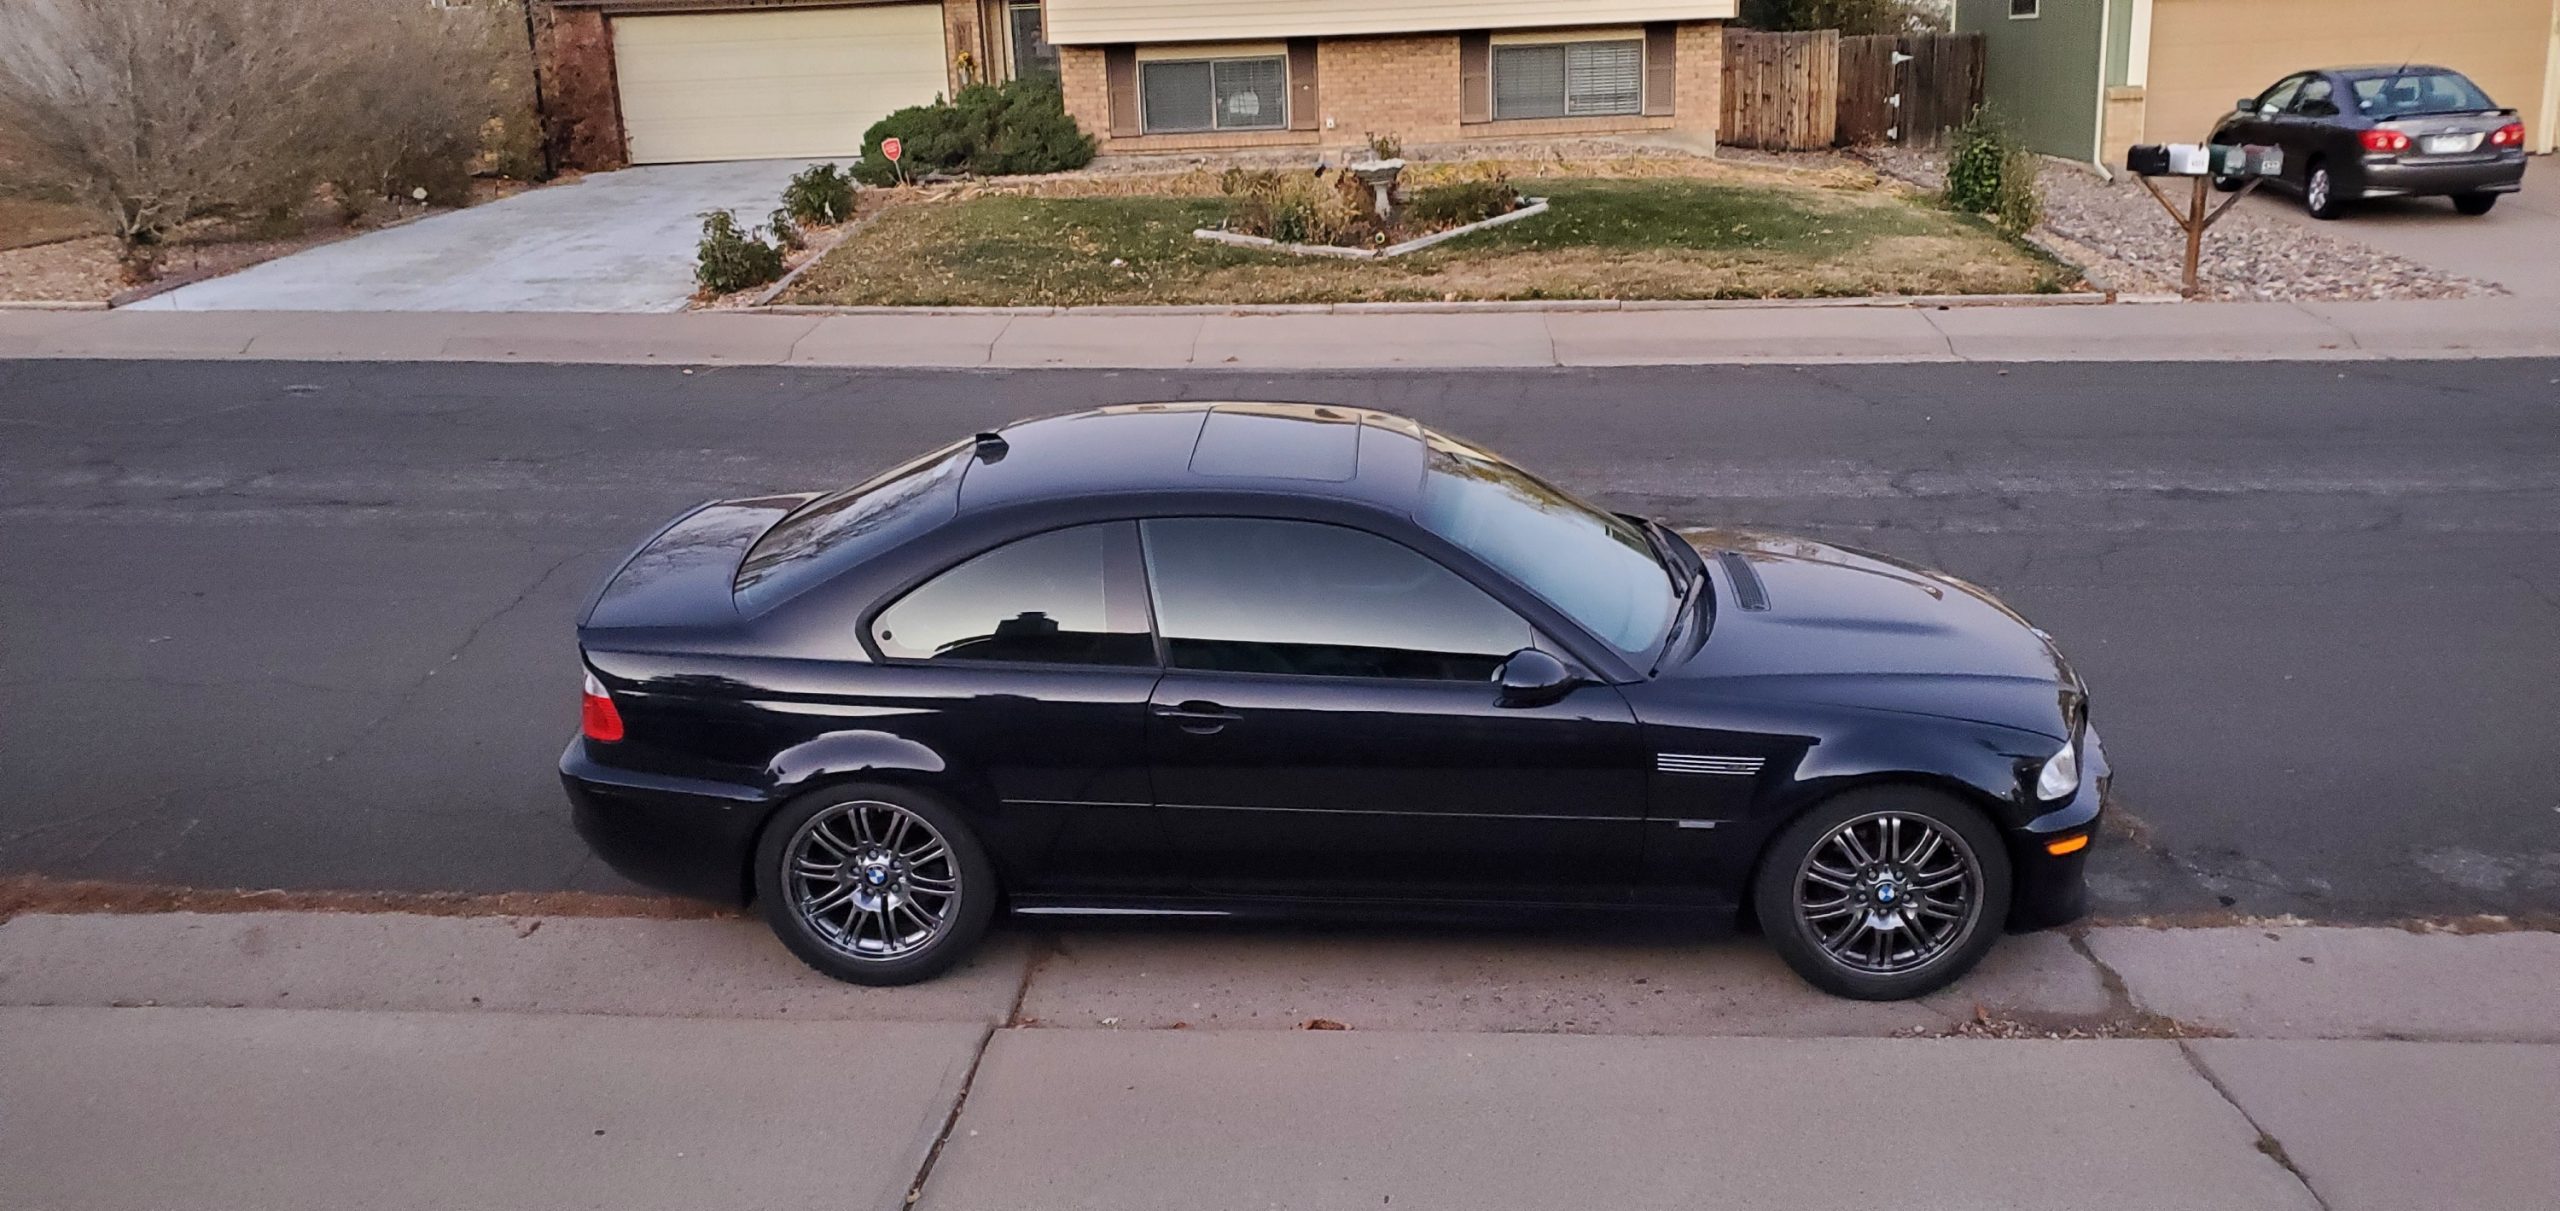 A black 2004 BMW M3 shot in profile at dusk